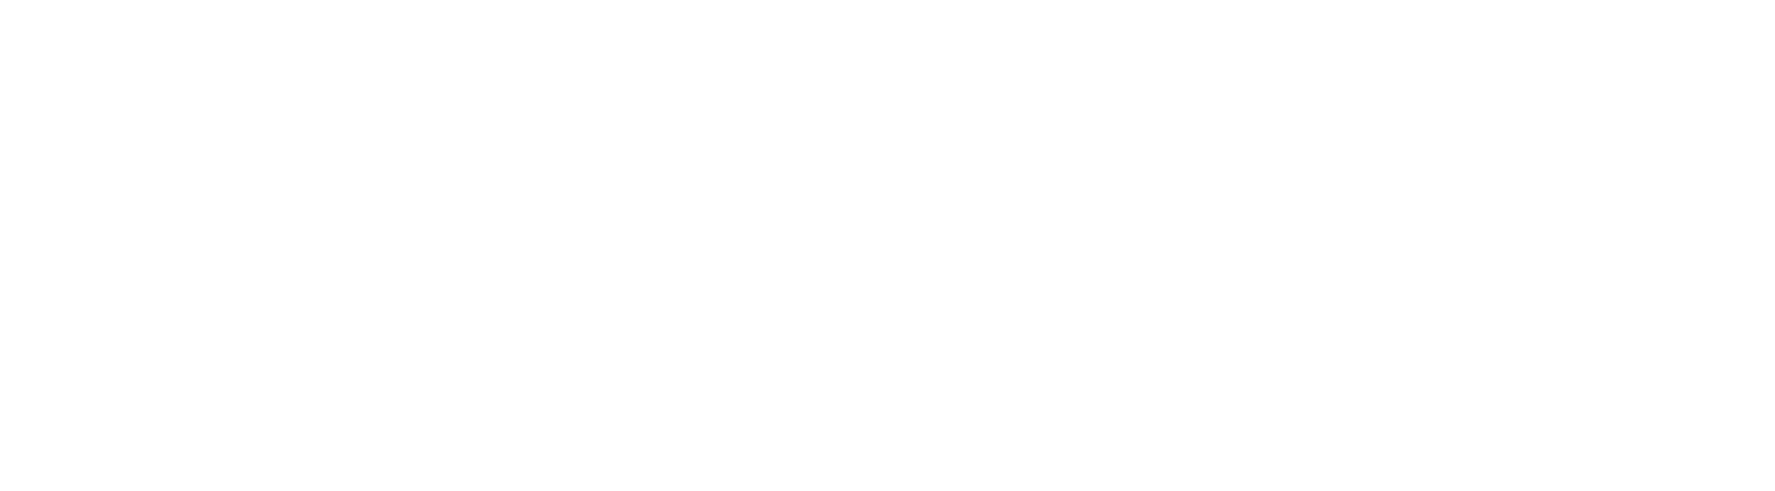 Finnish Signbank